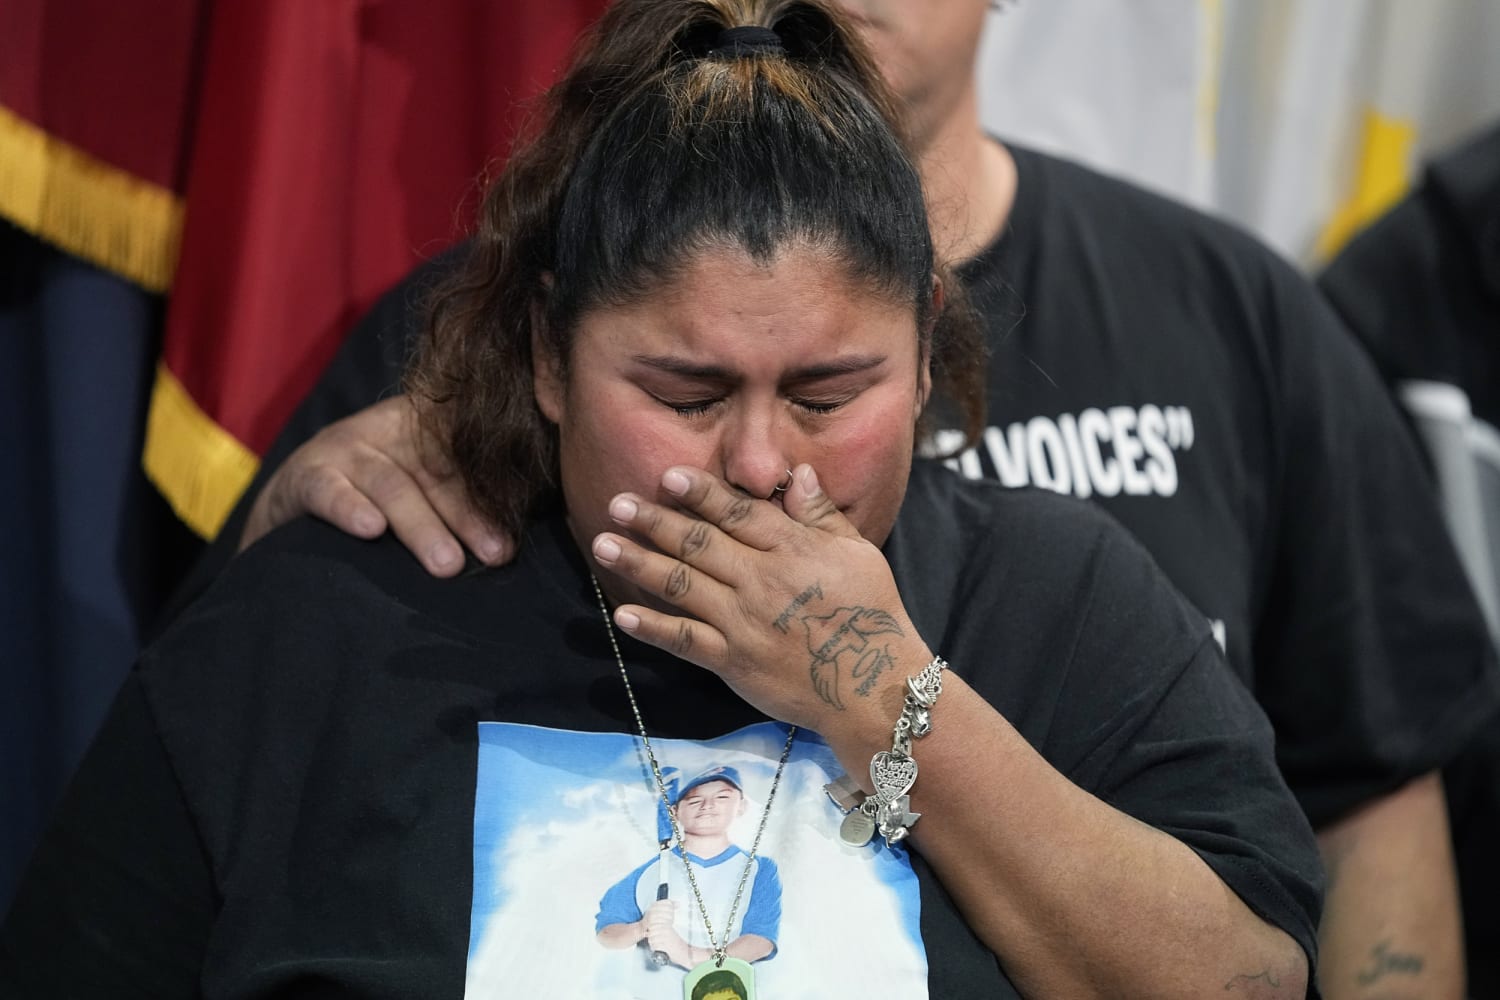 Families of victims of Uvalde massacre call for legislation amid more gun violence